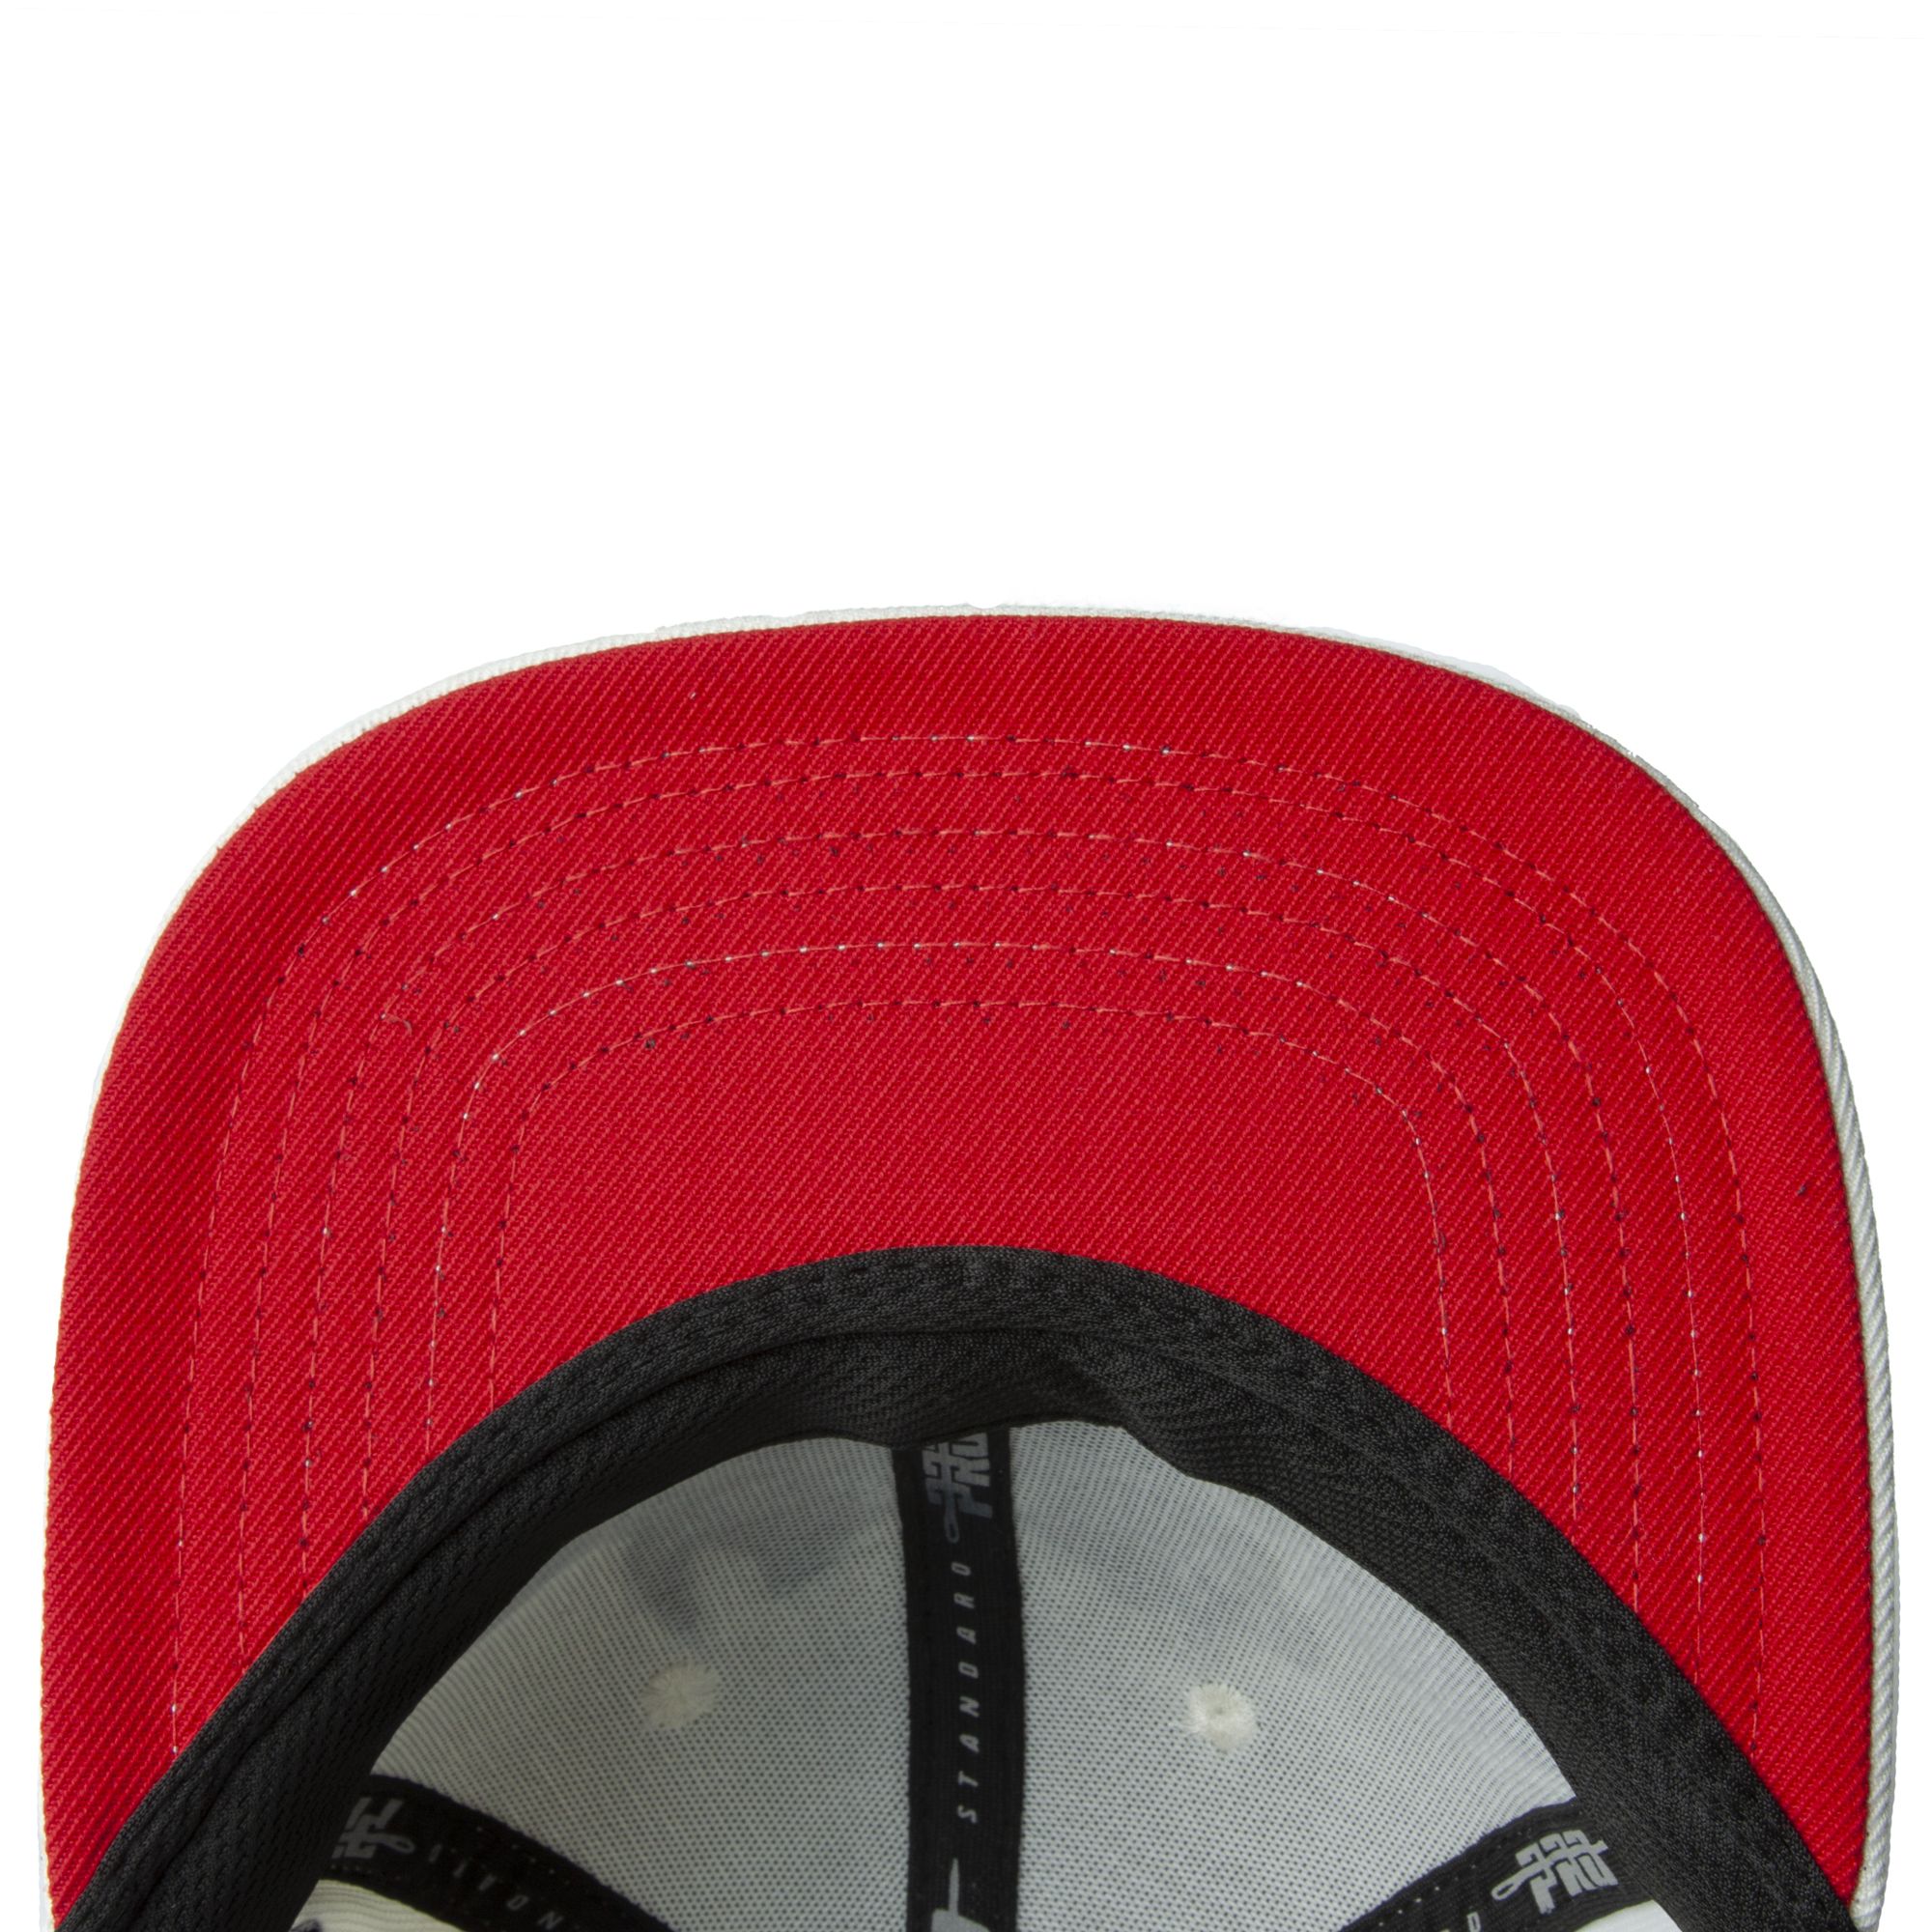 CHICAGO BULLS ROSES SNAPBACK HAT (RED) – Pro Standard